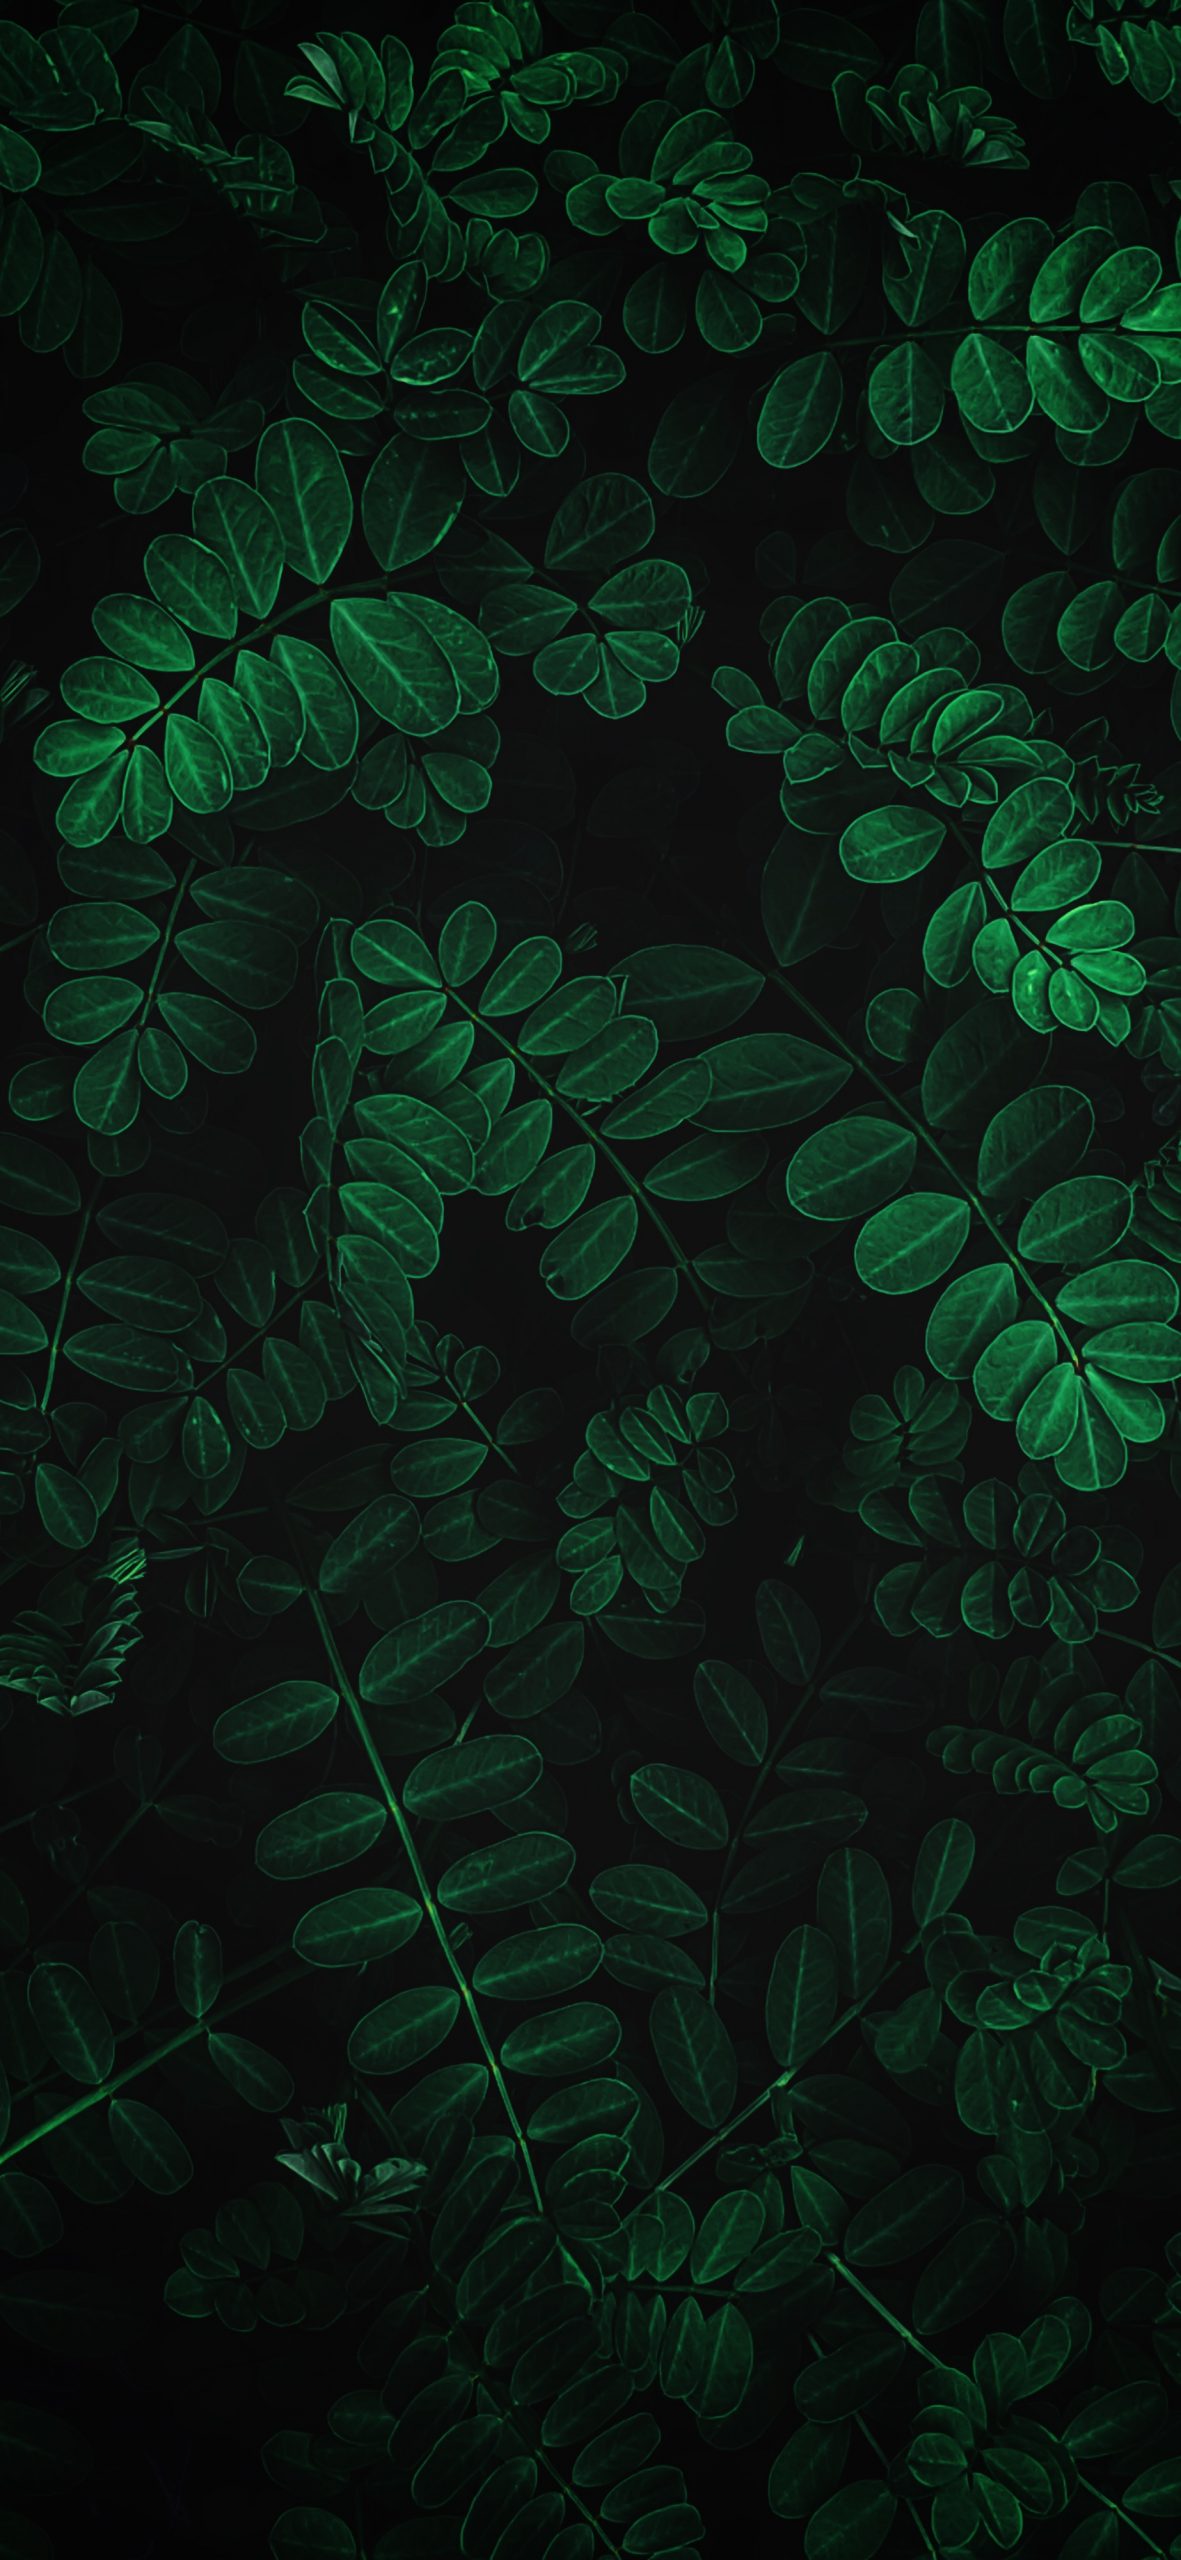 Nature-photography-iPhone-wallpaper-wallsbyjfl-ferns